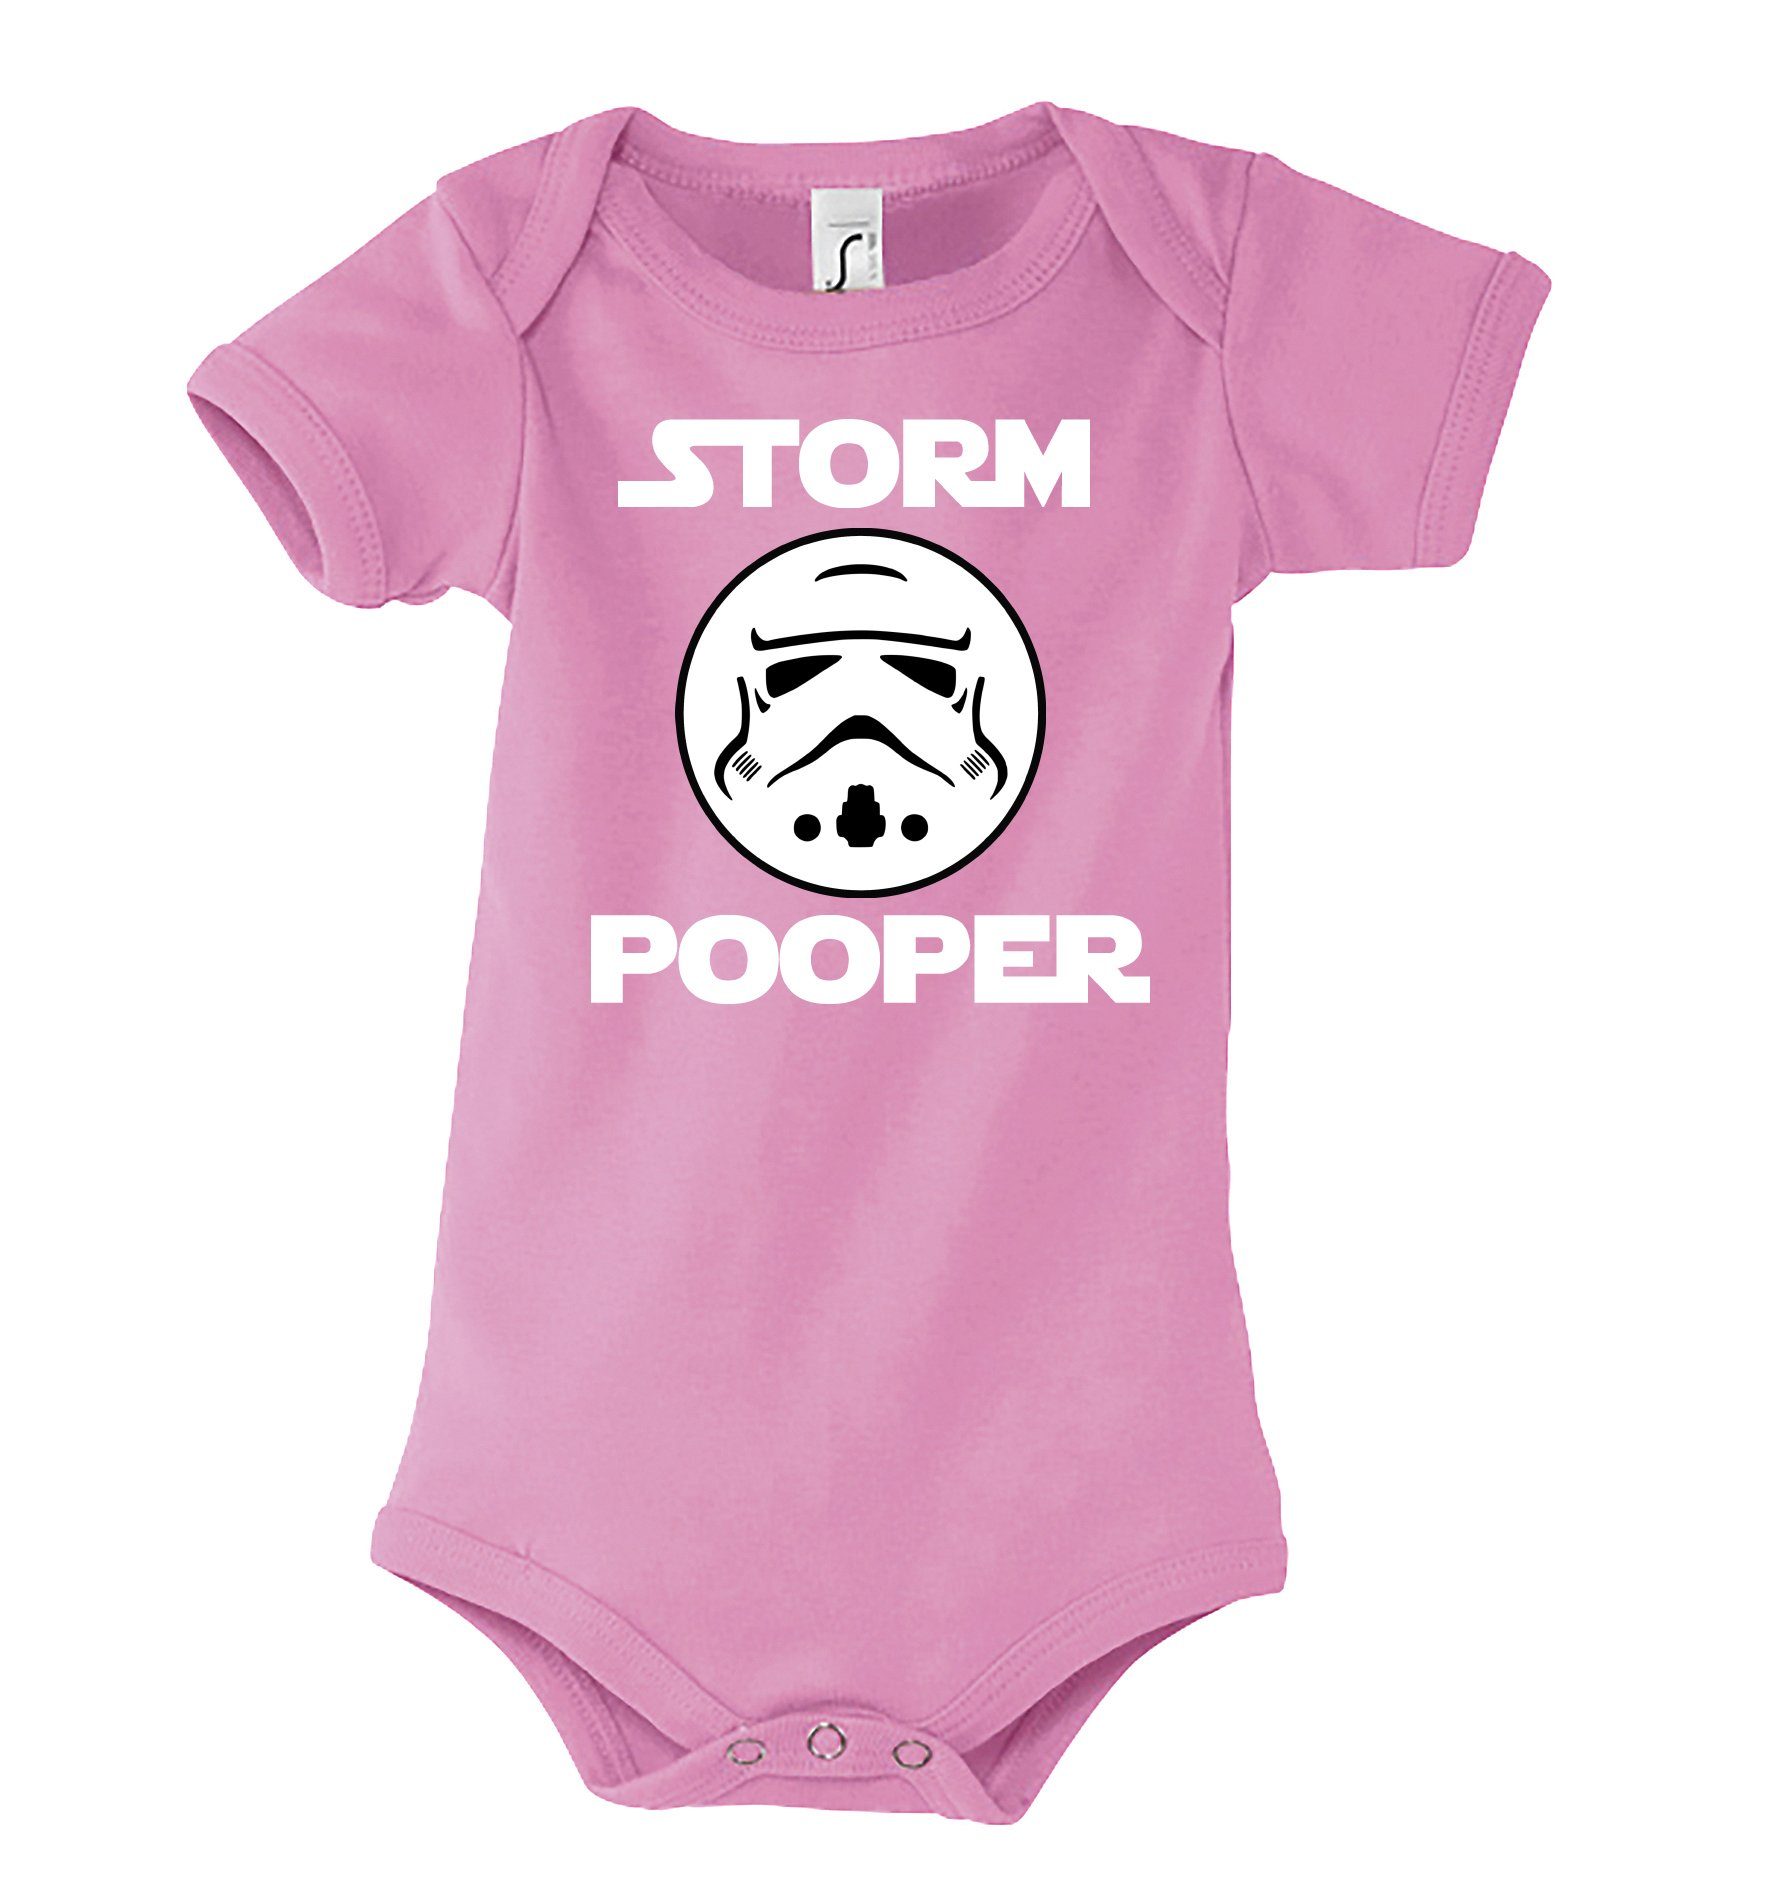 Logo Rosa & Trooper Kurzarmbody Storm Print Baby mit Youth Designz Kurzarm Spruch Body lustigem Pooper Strampler